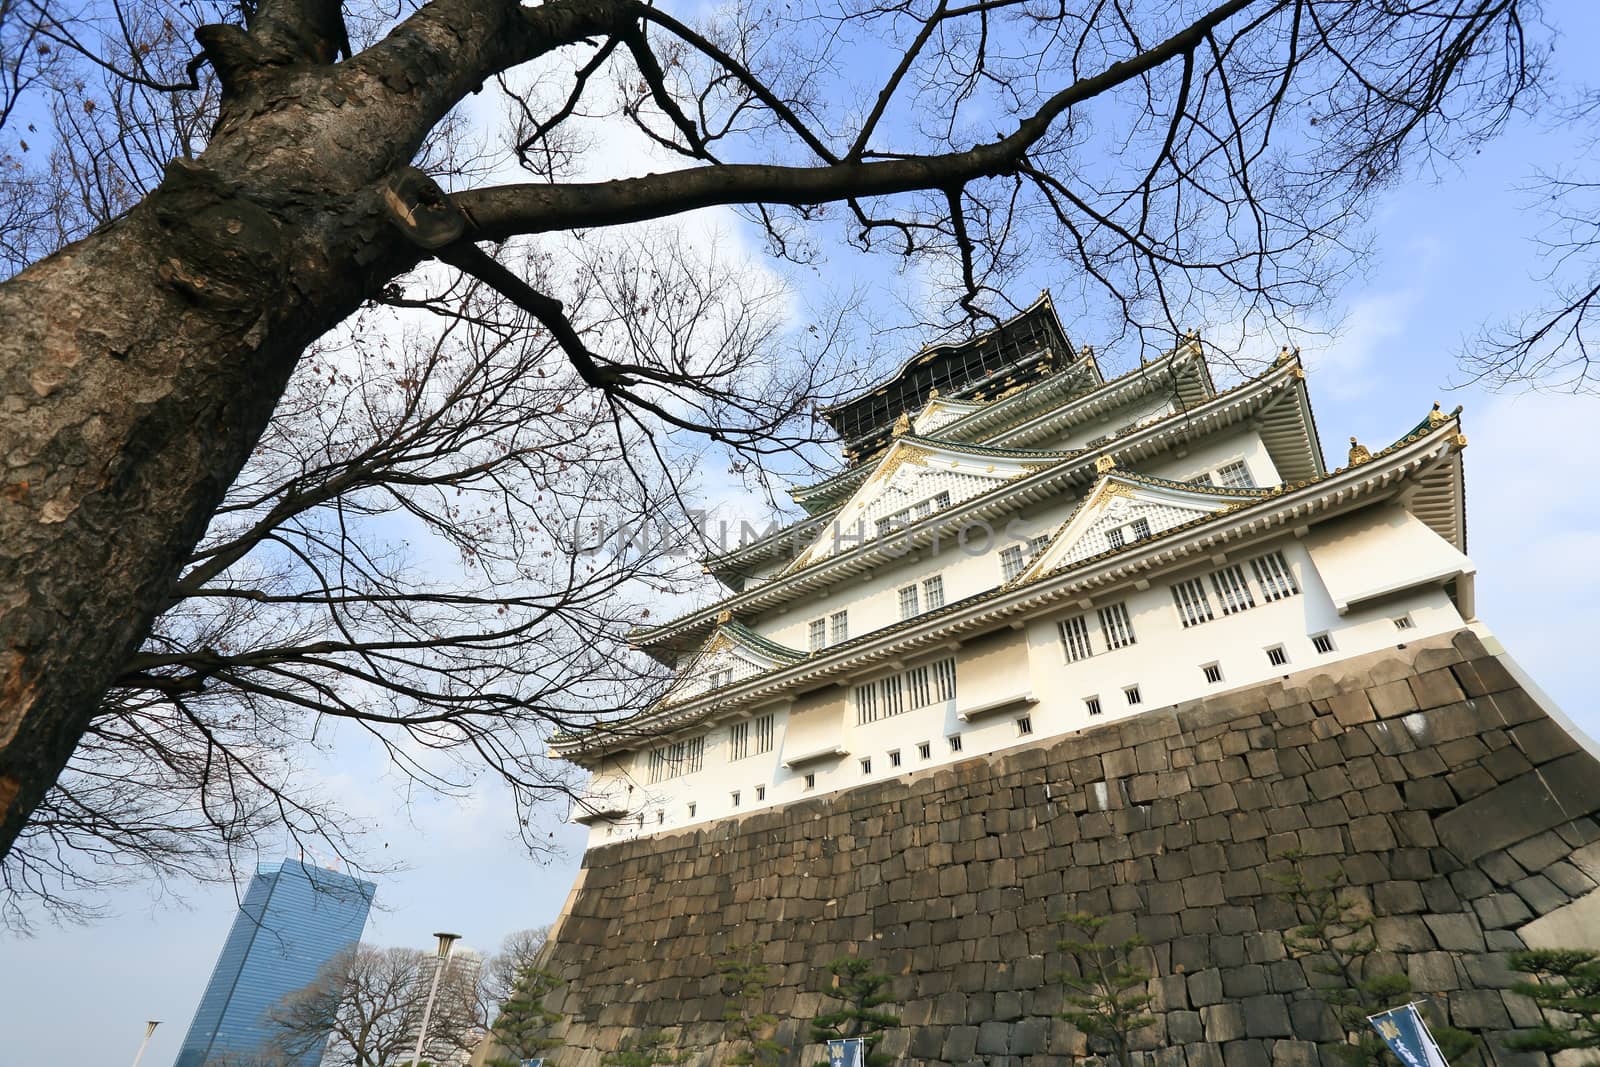 Osaka Castle in Osaka, Japan by rufous